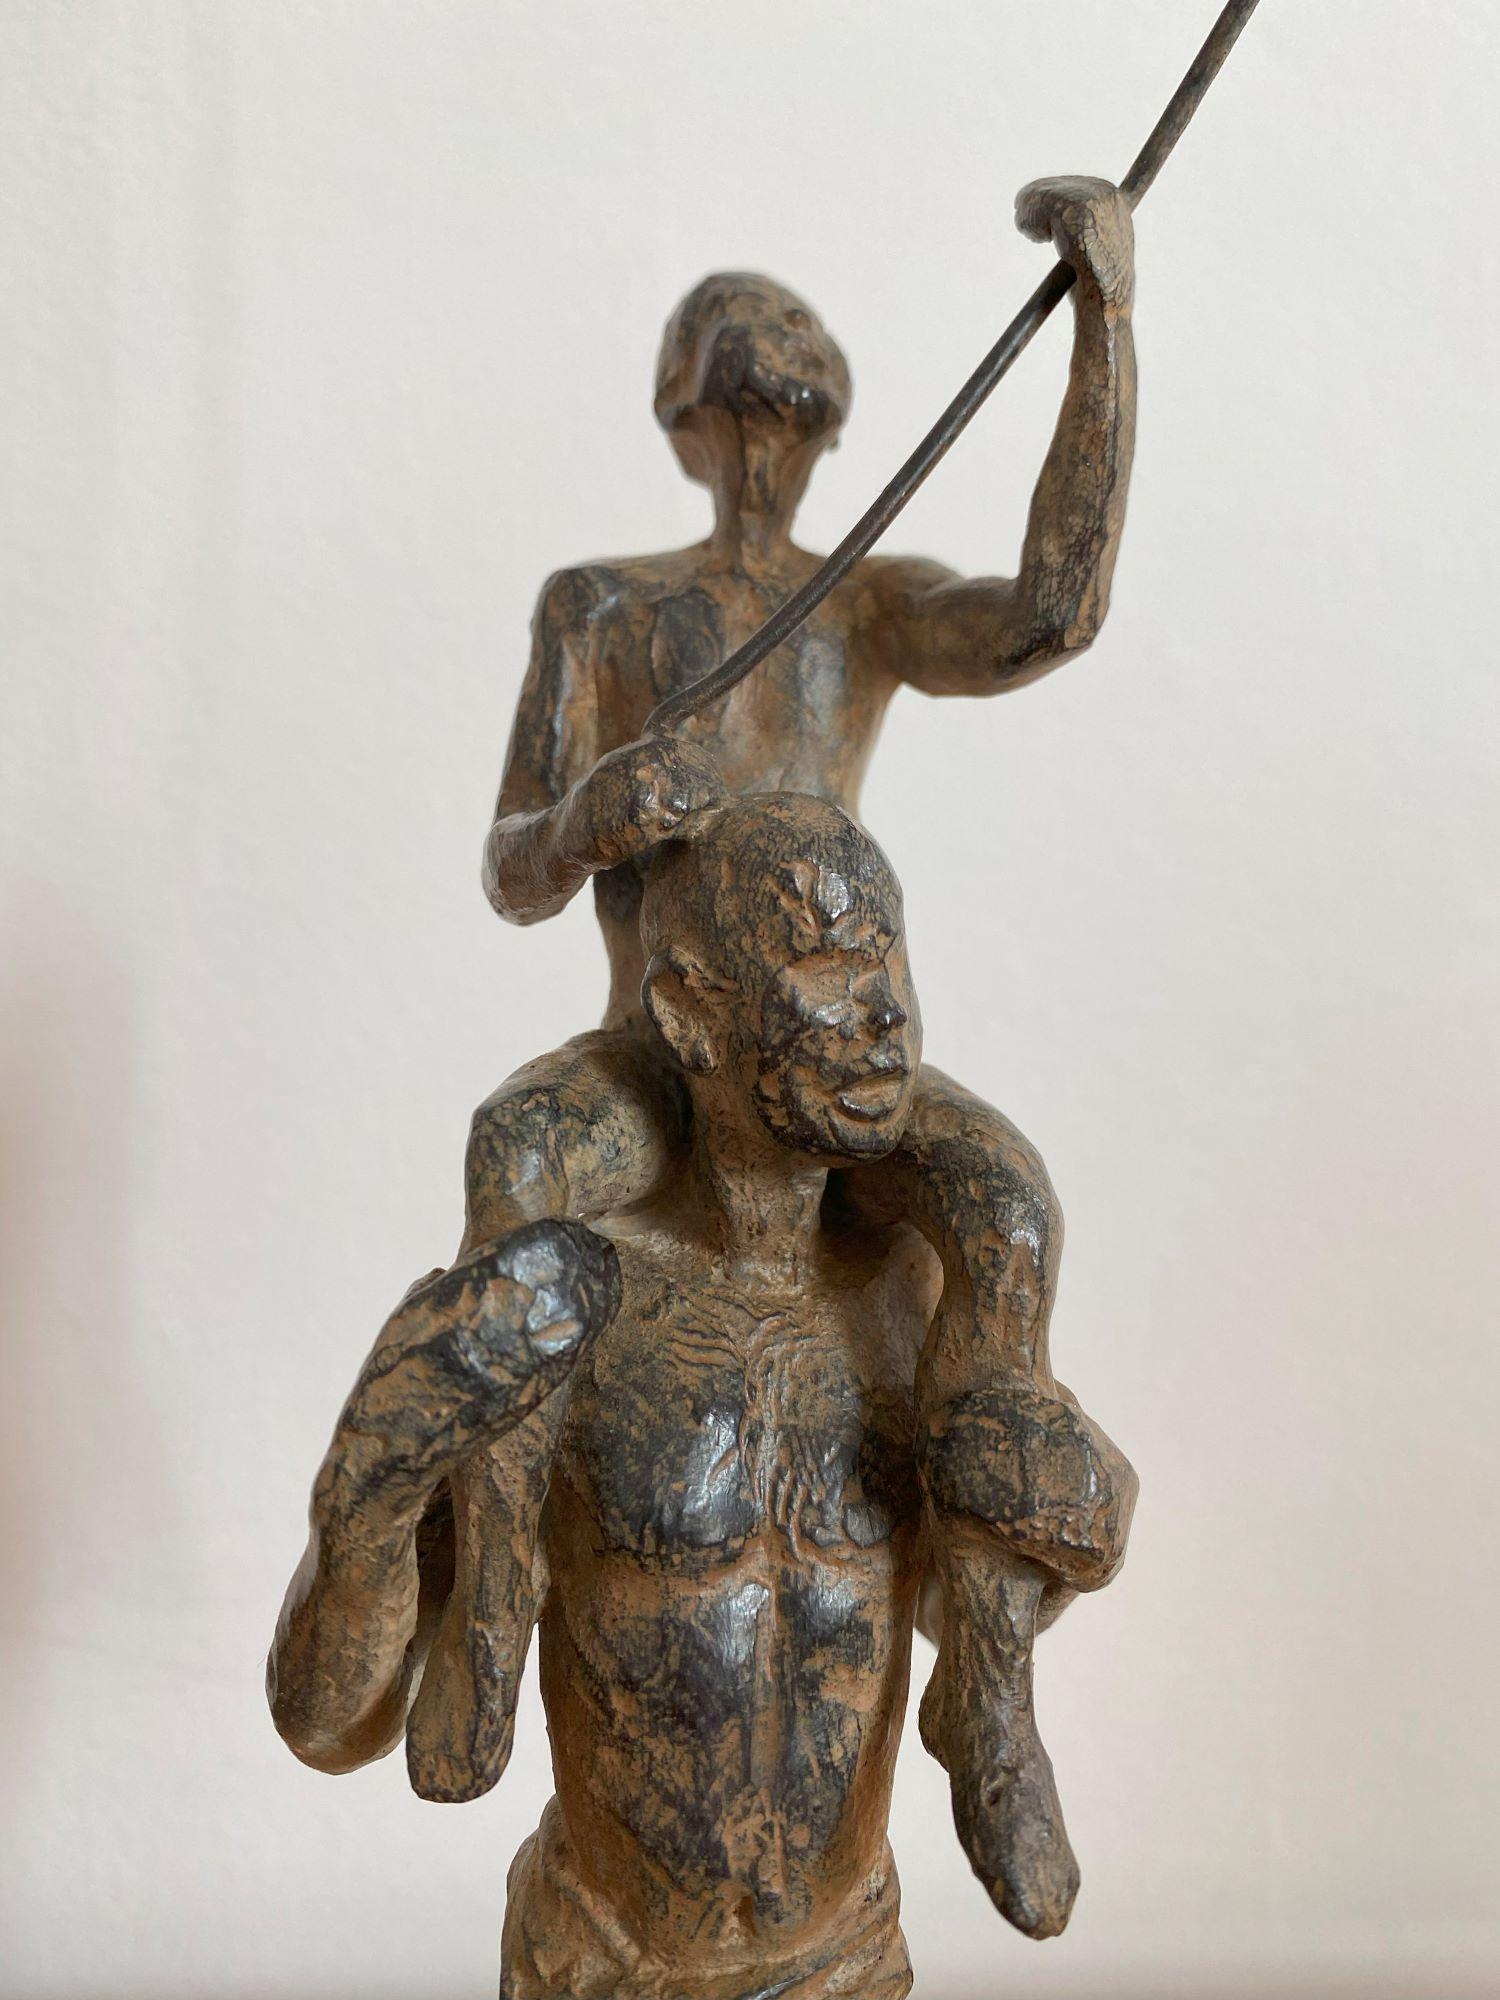 Childhood’s Sail VI by Marine de Soos - Bronze sculpture, child's figure, kite For Sale 5